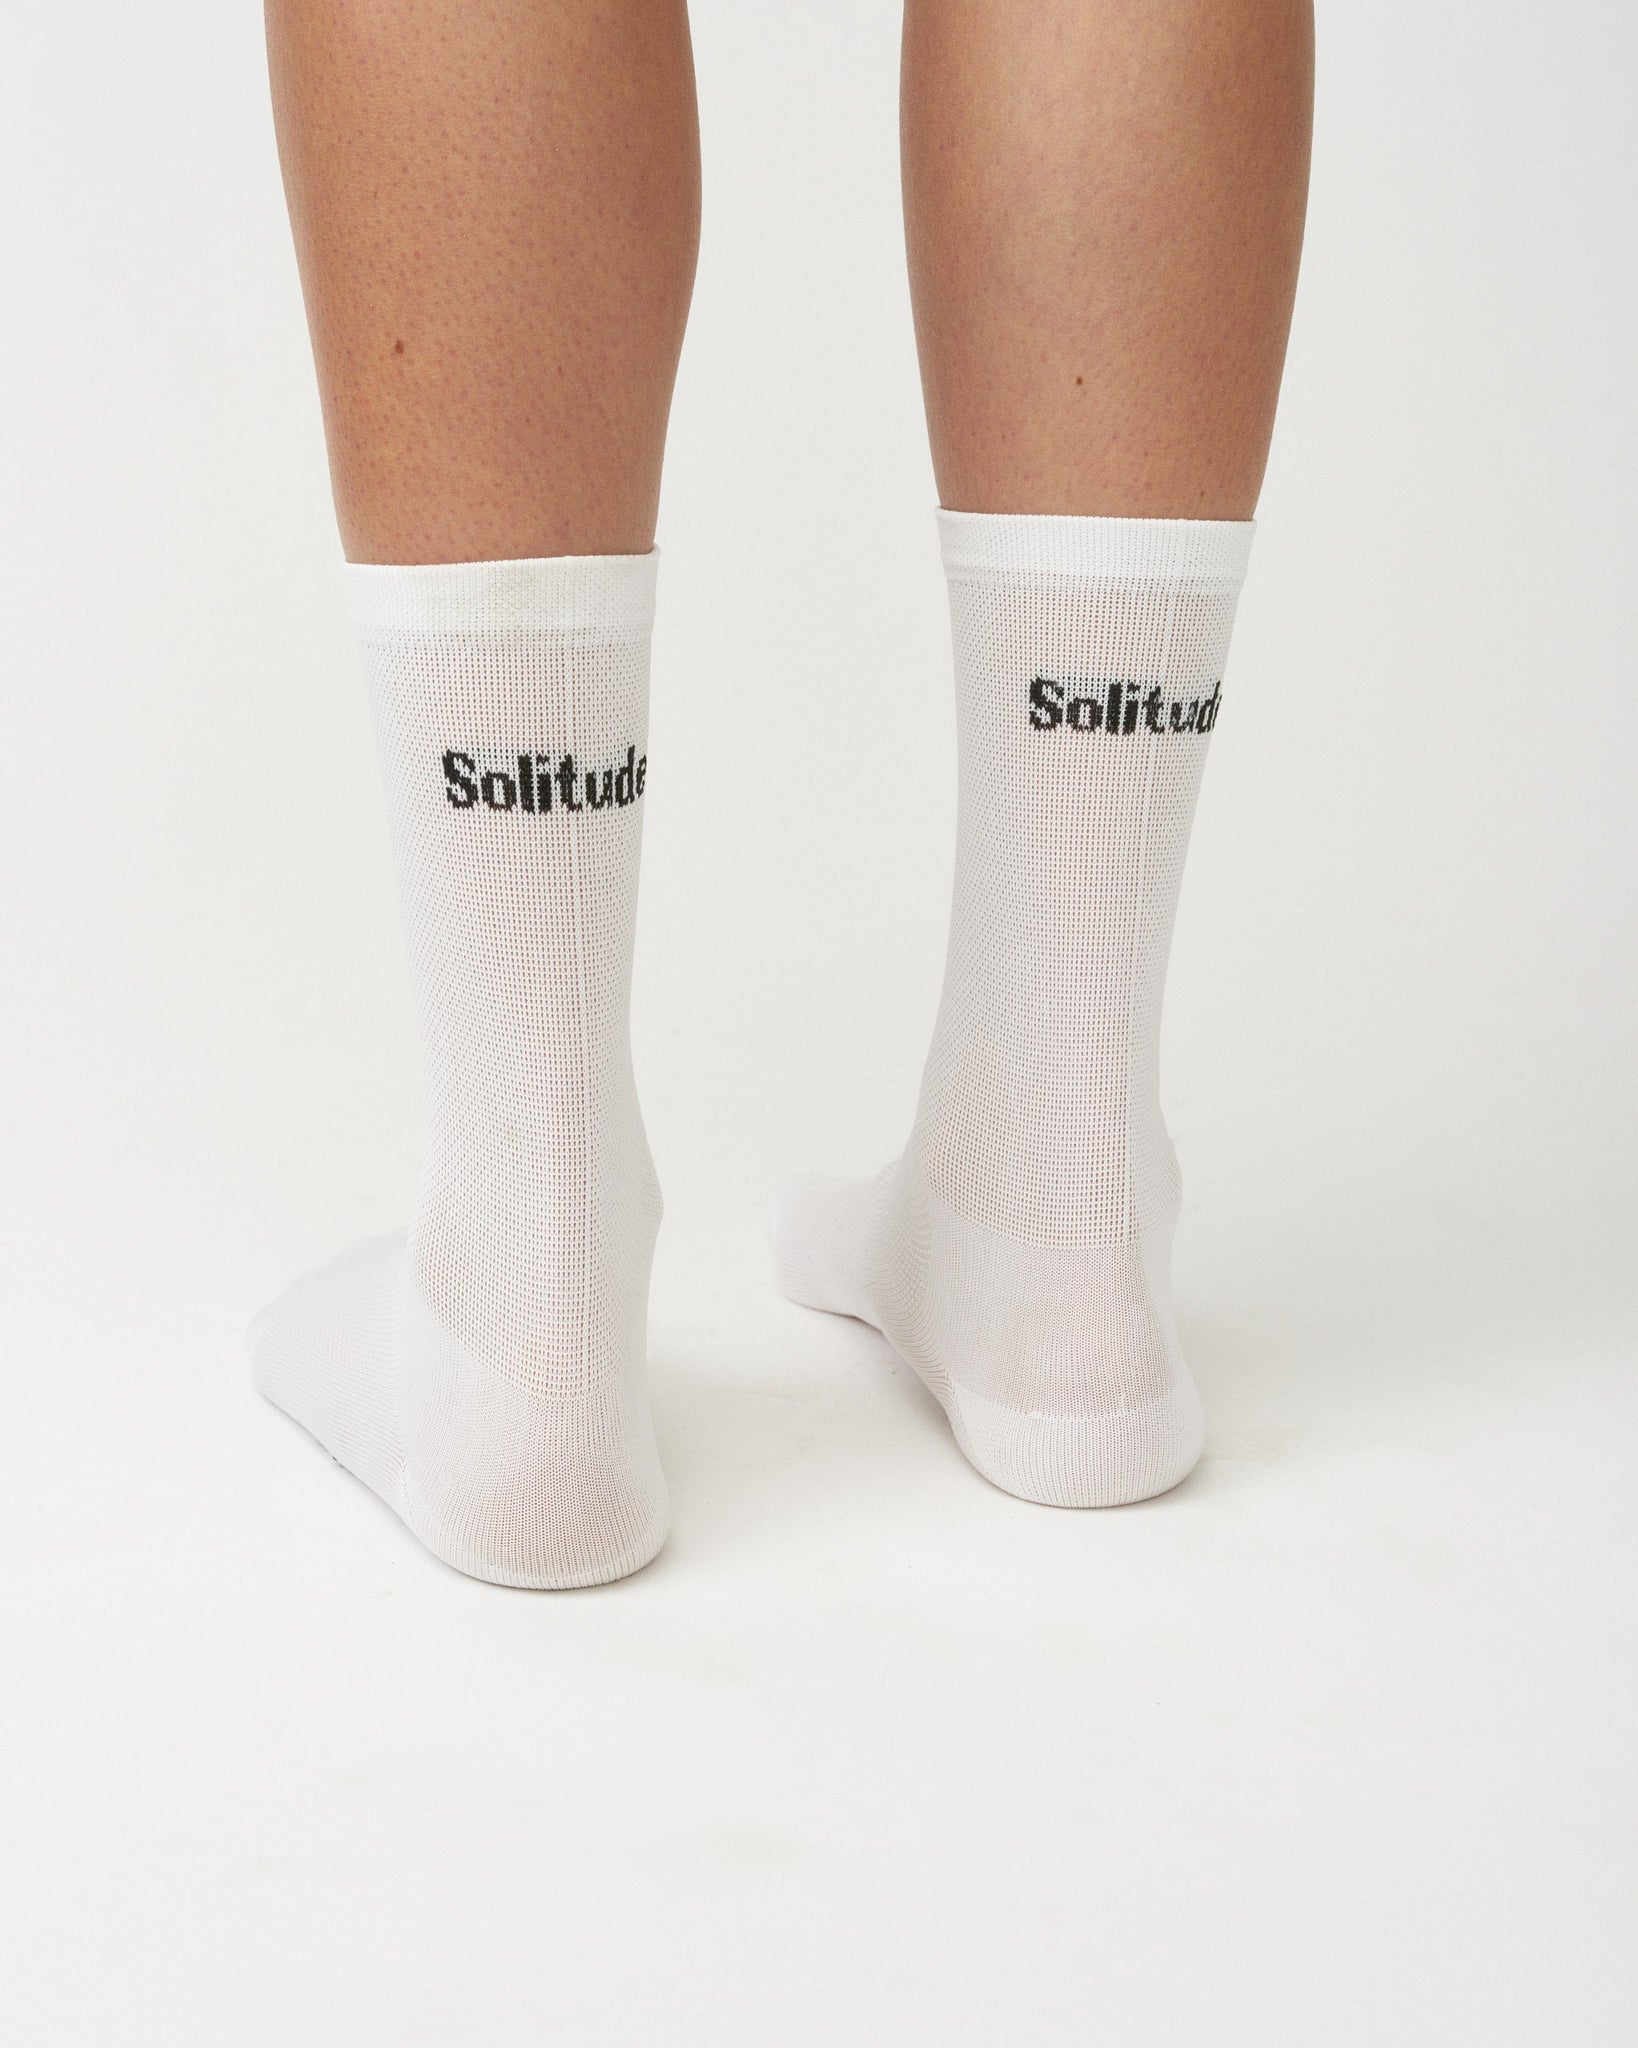 Solitude Socks - White